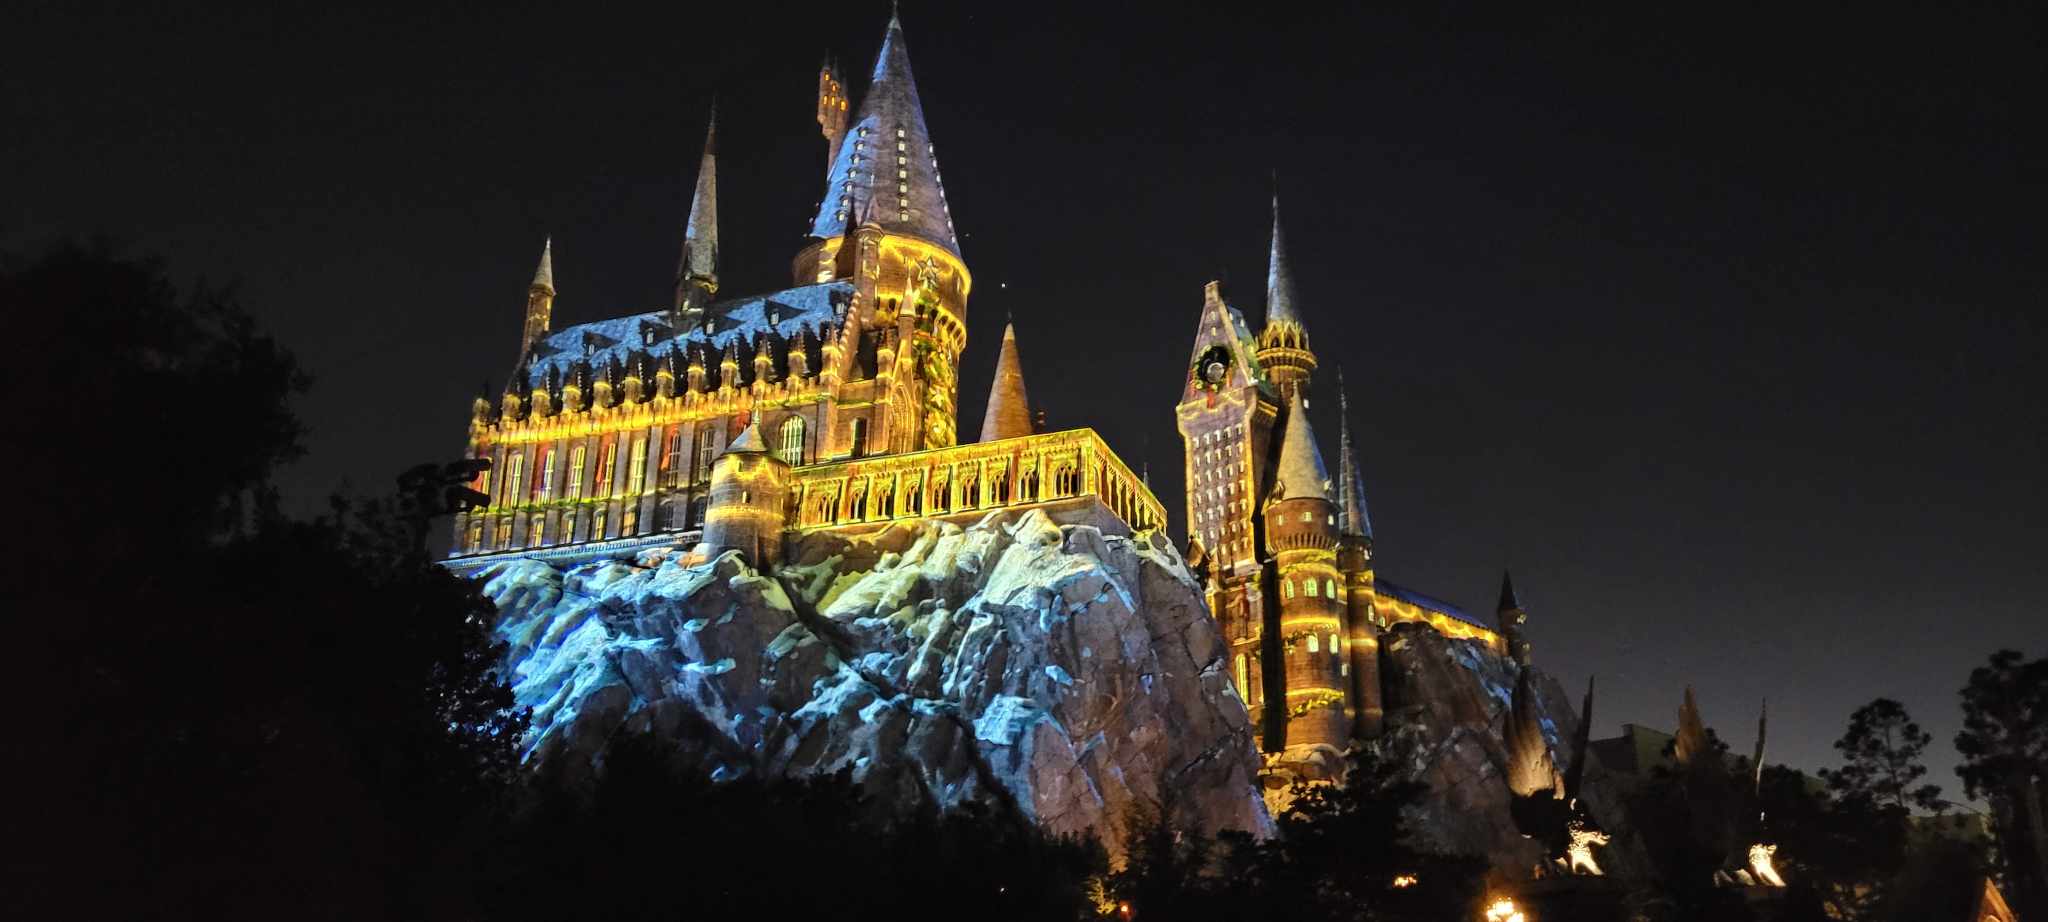 Hogwarts Castle Nighttime Lights Closed for Extended Refurbishment